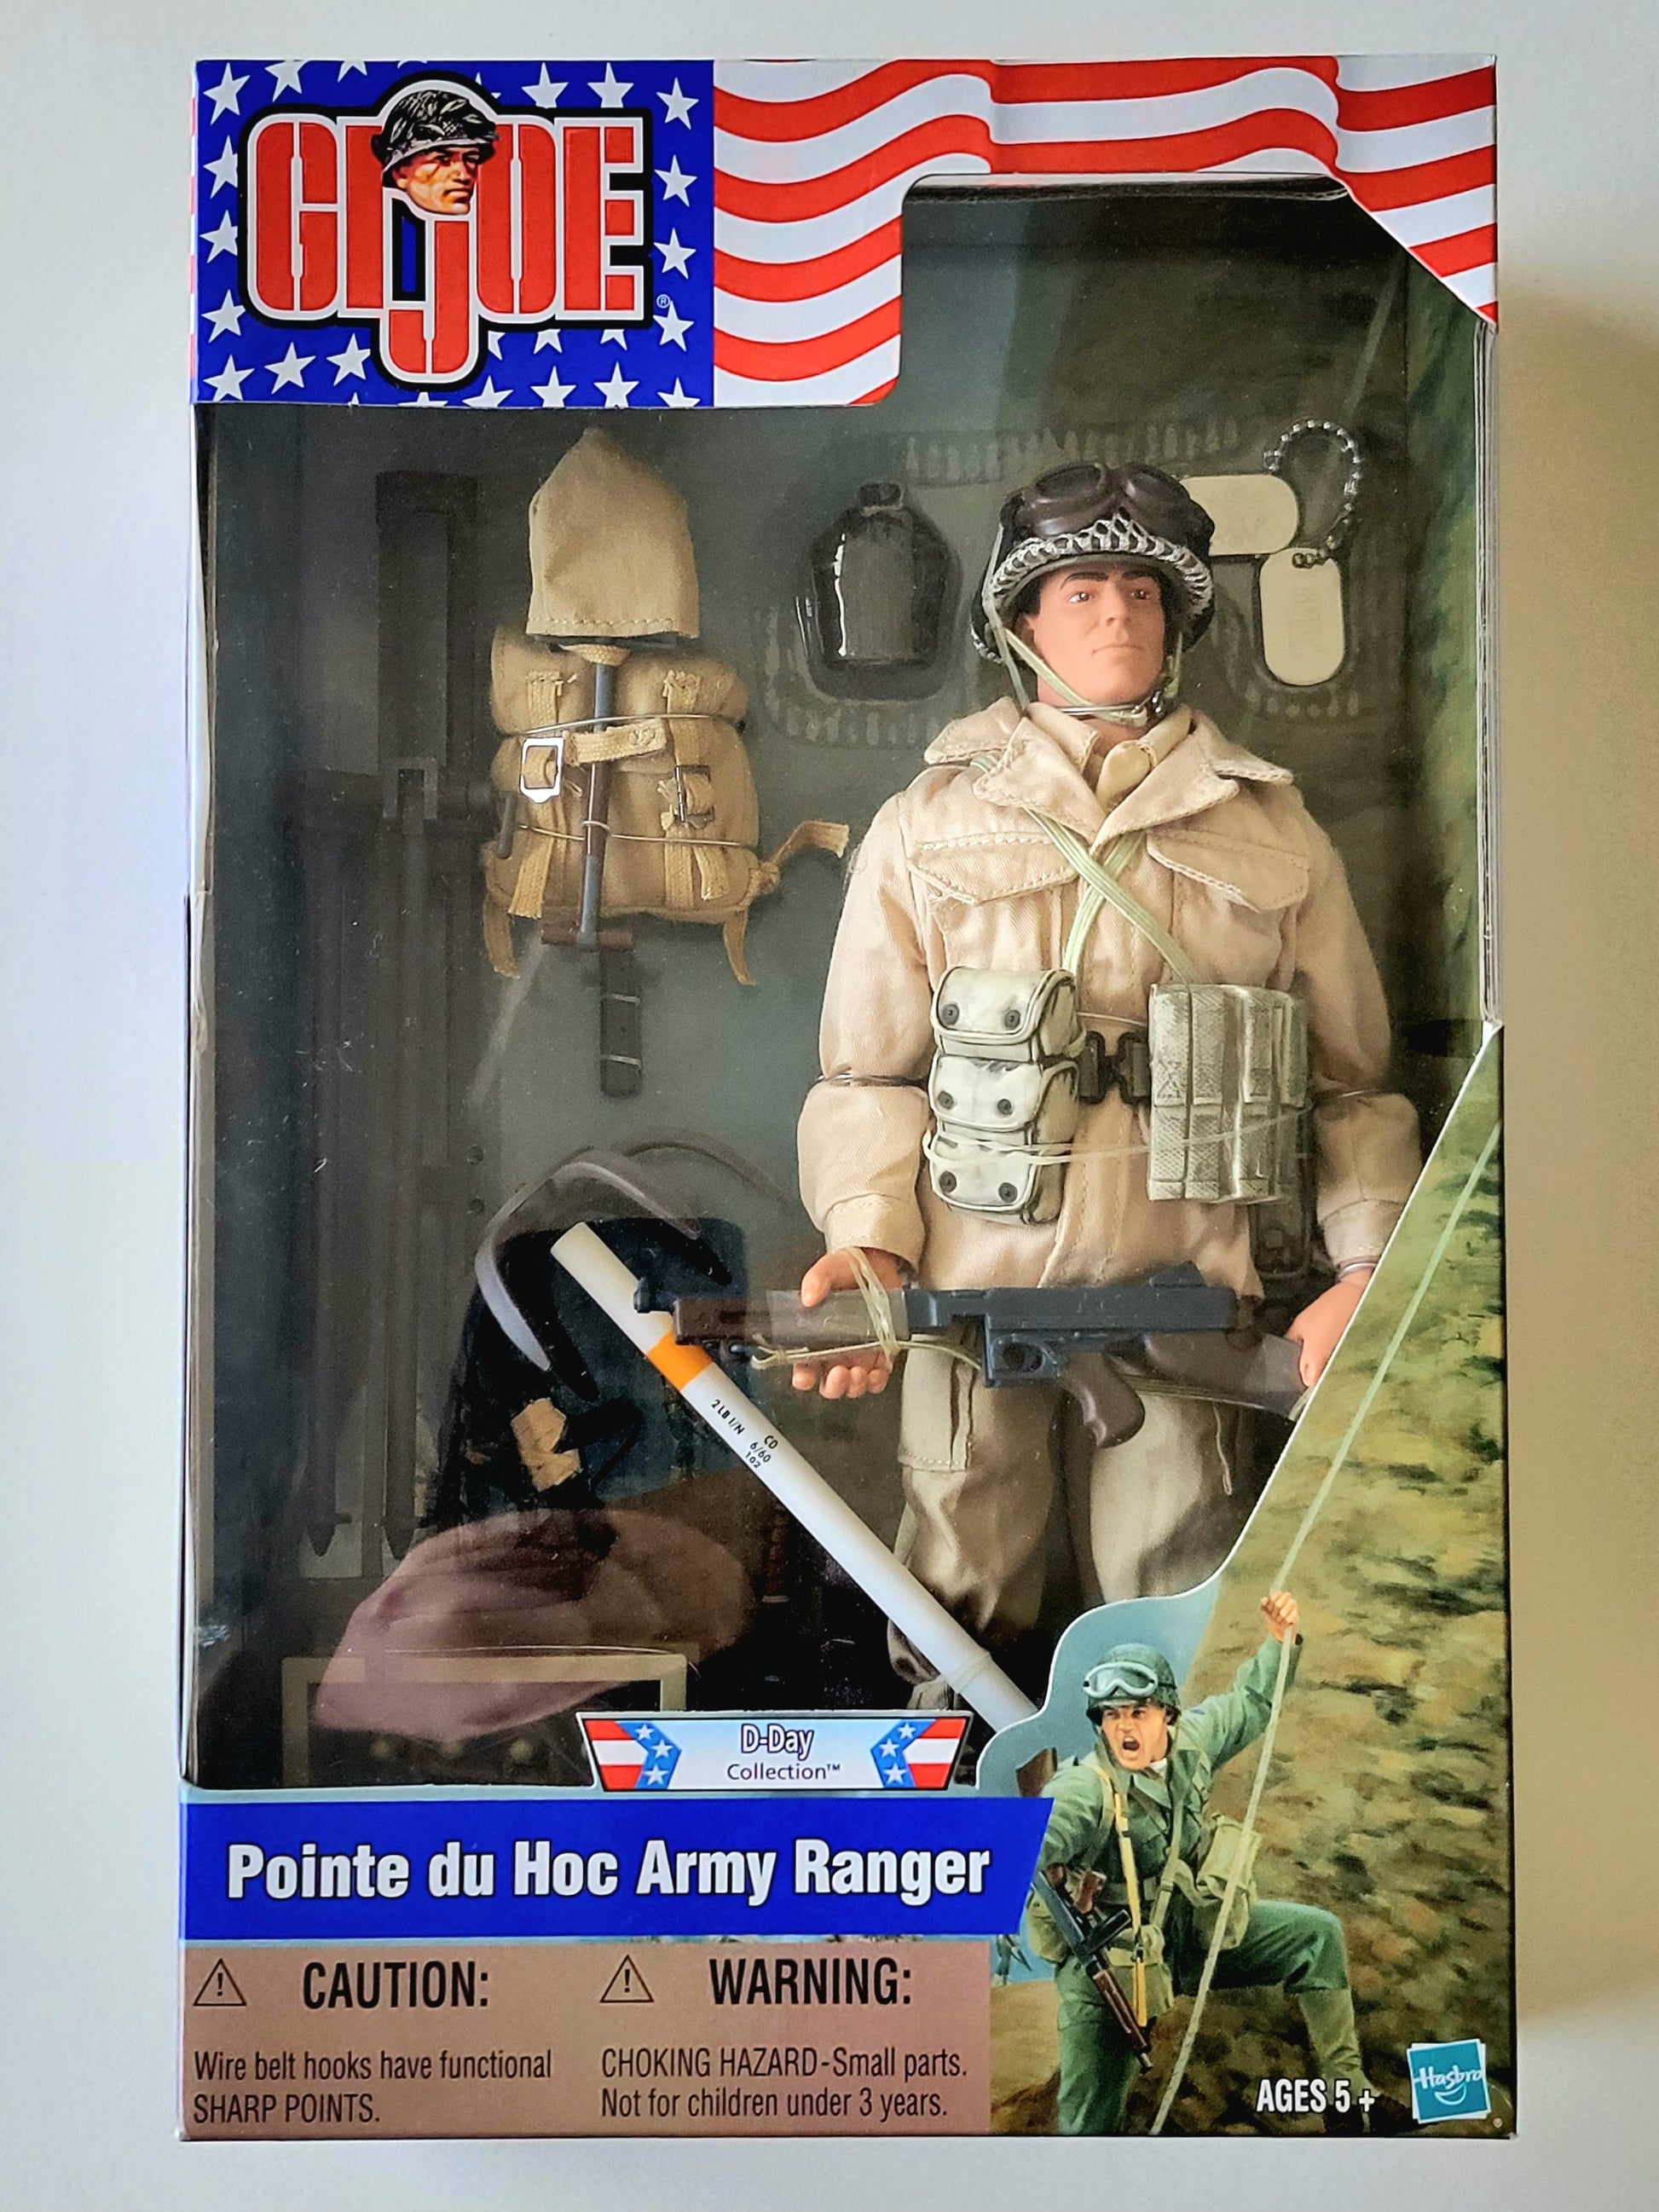 G.I. Joe Pointe du Hoc Army Ranger 12-Inch Action Figure – Action